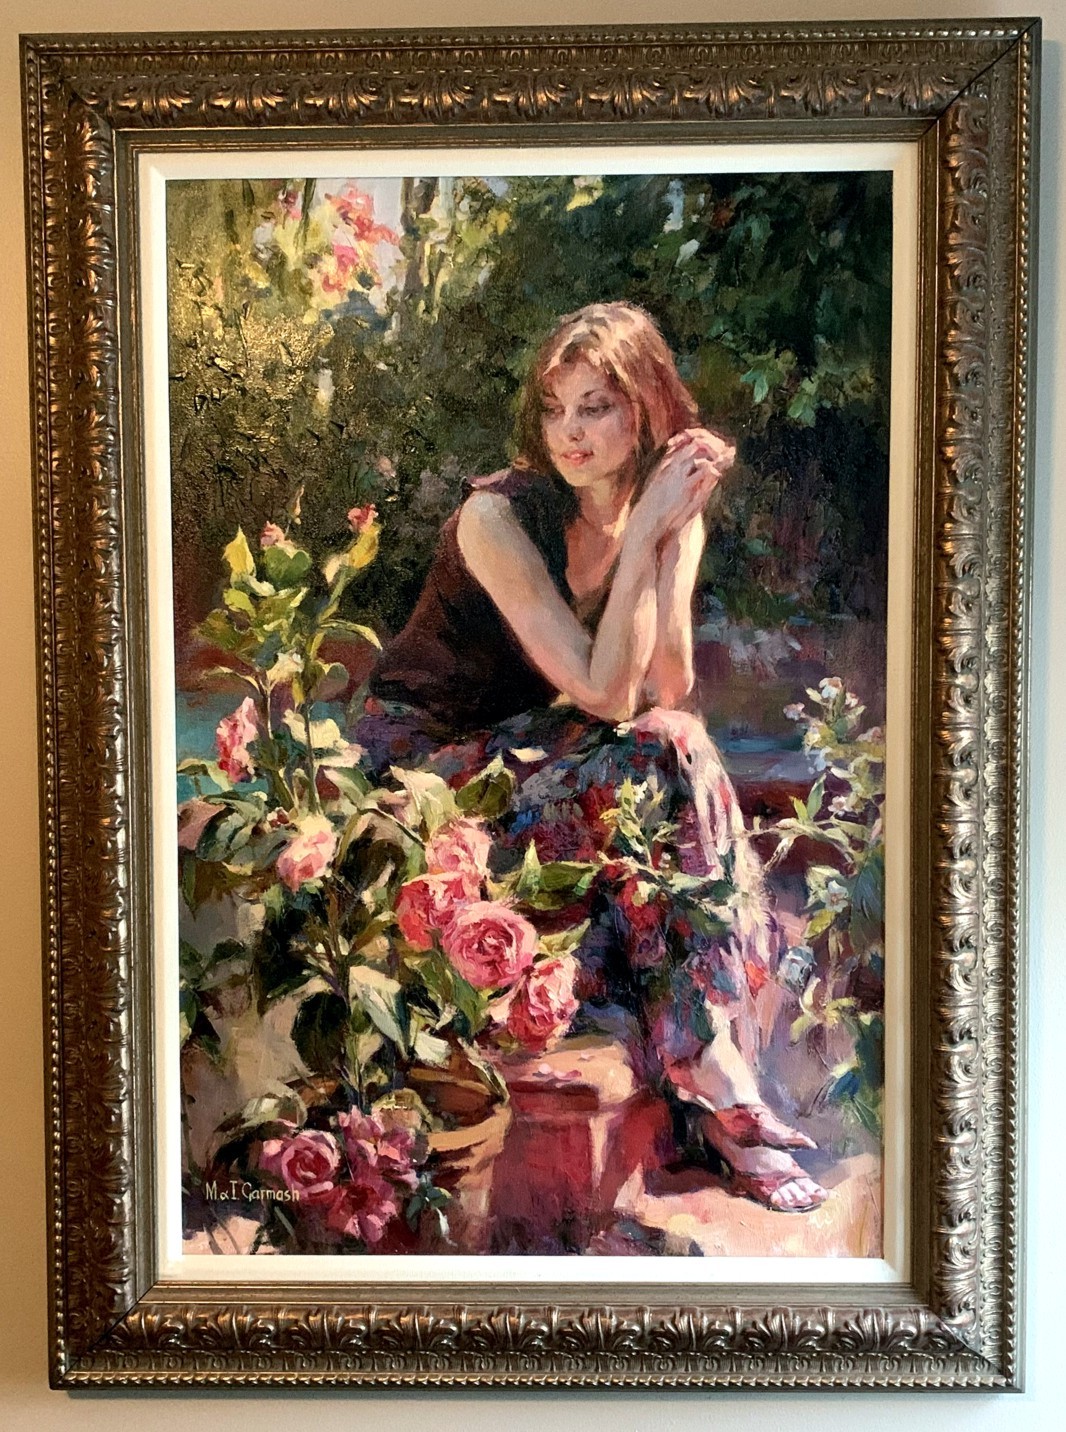 Among Flowers - original painting -
by Michael and Inessa Garmash